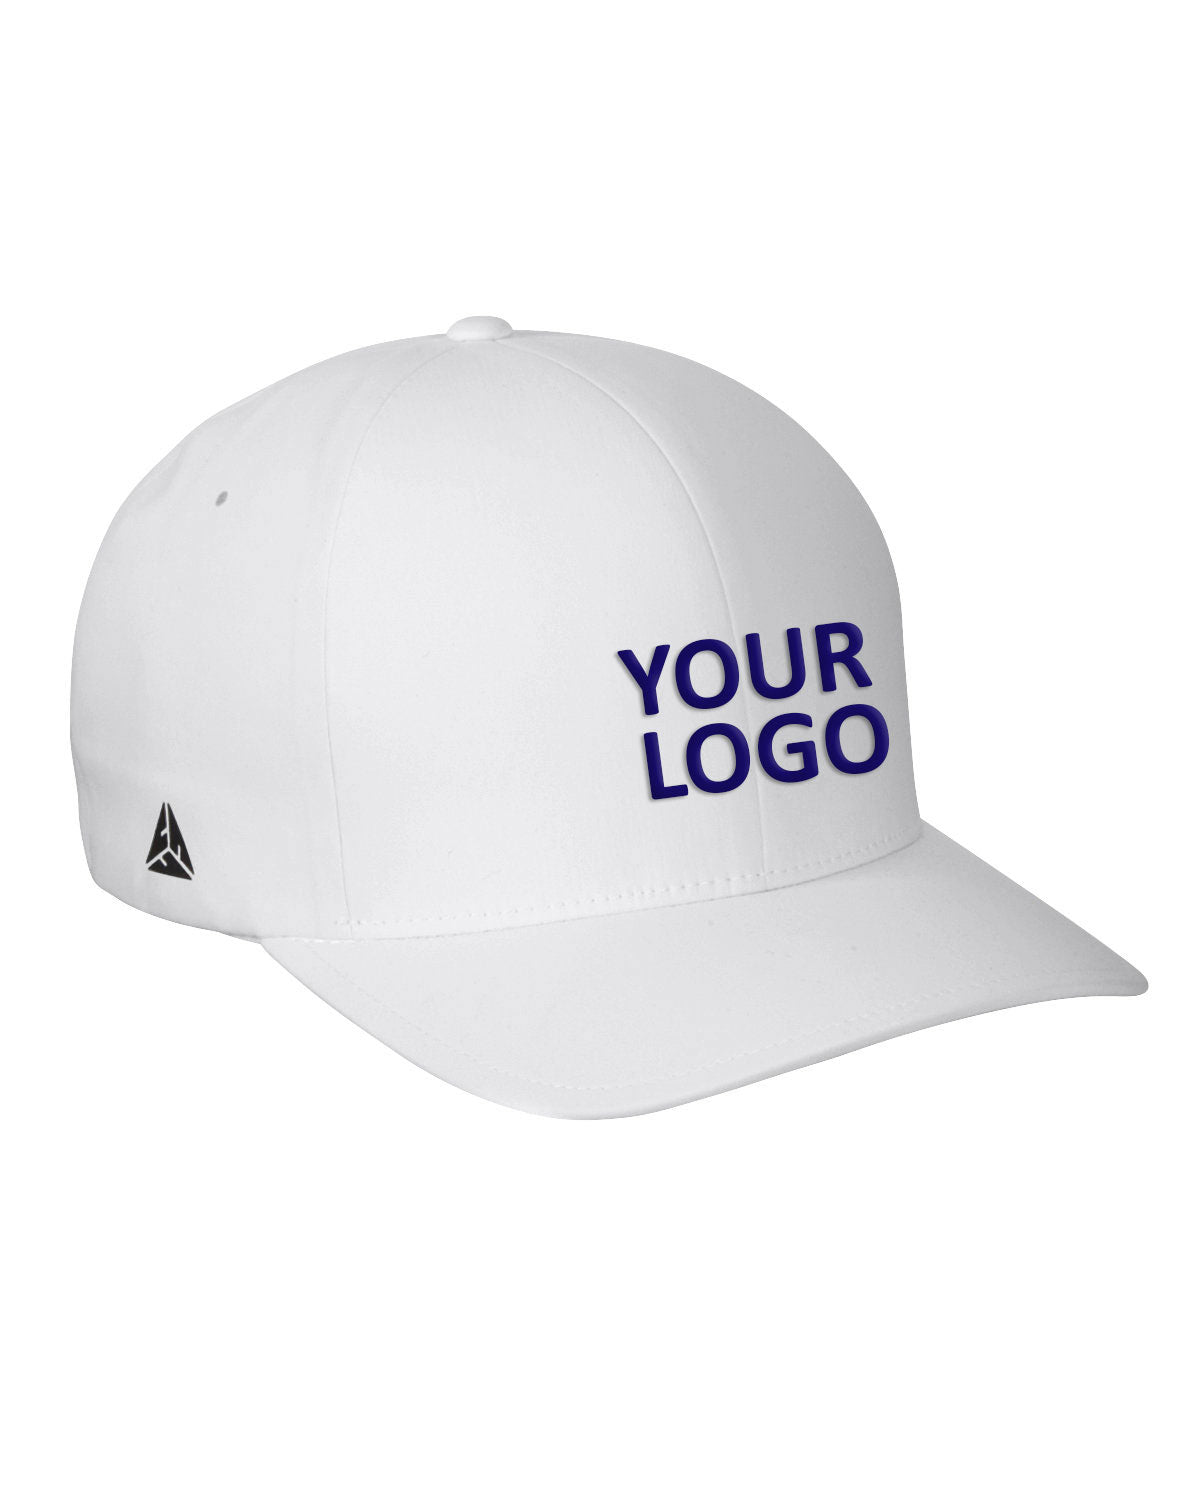 flexfit_yp180_white_company_logo_headwear